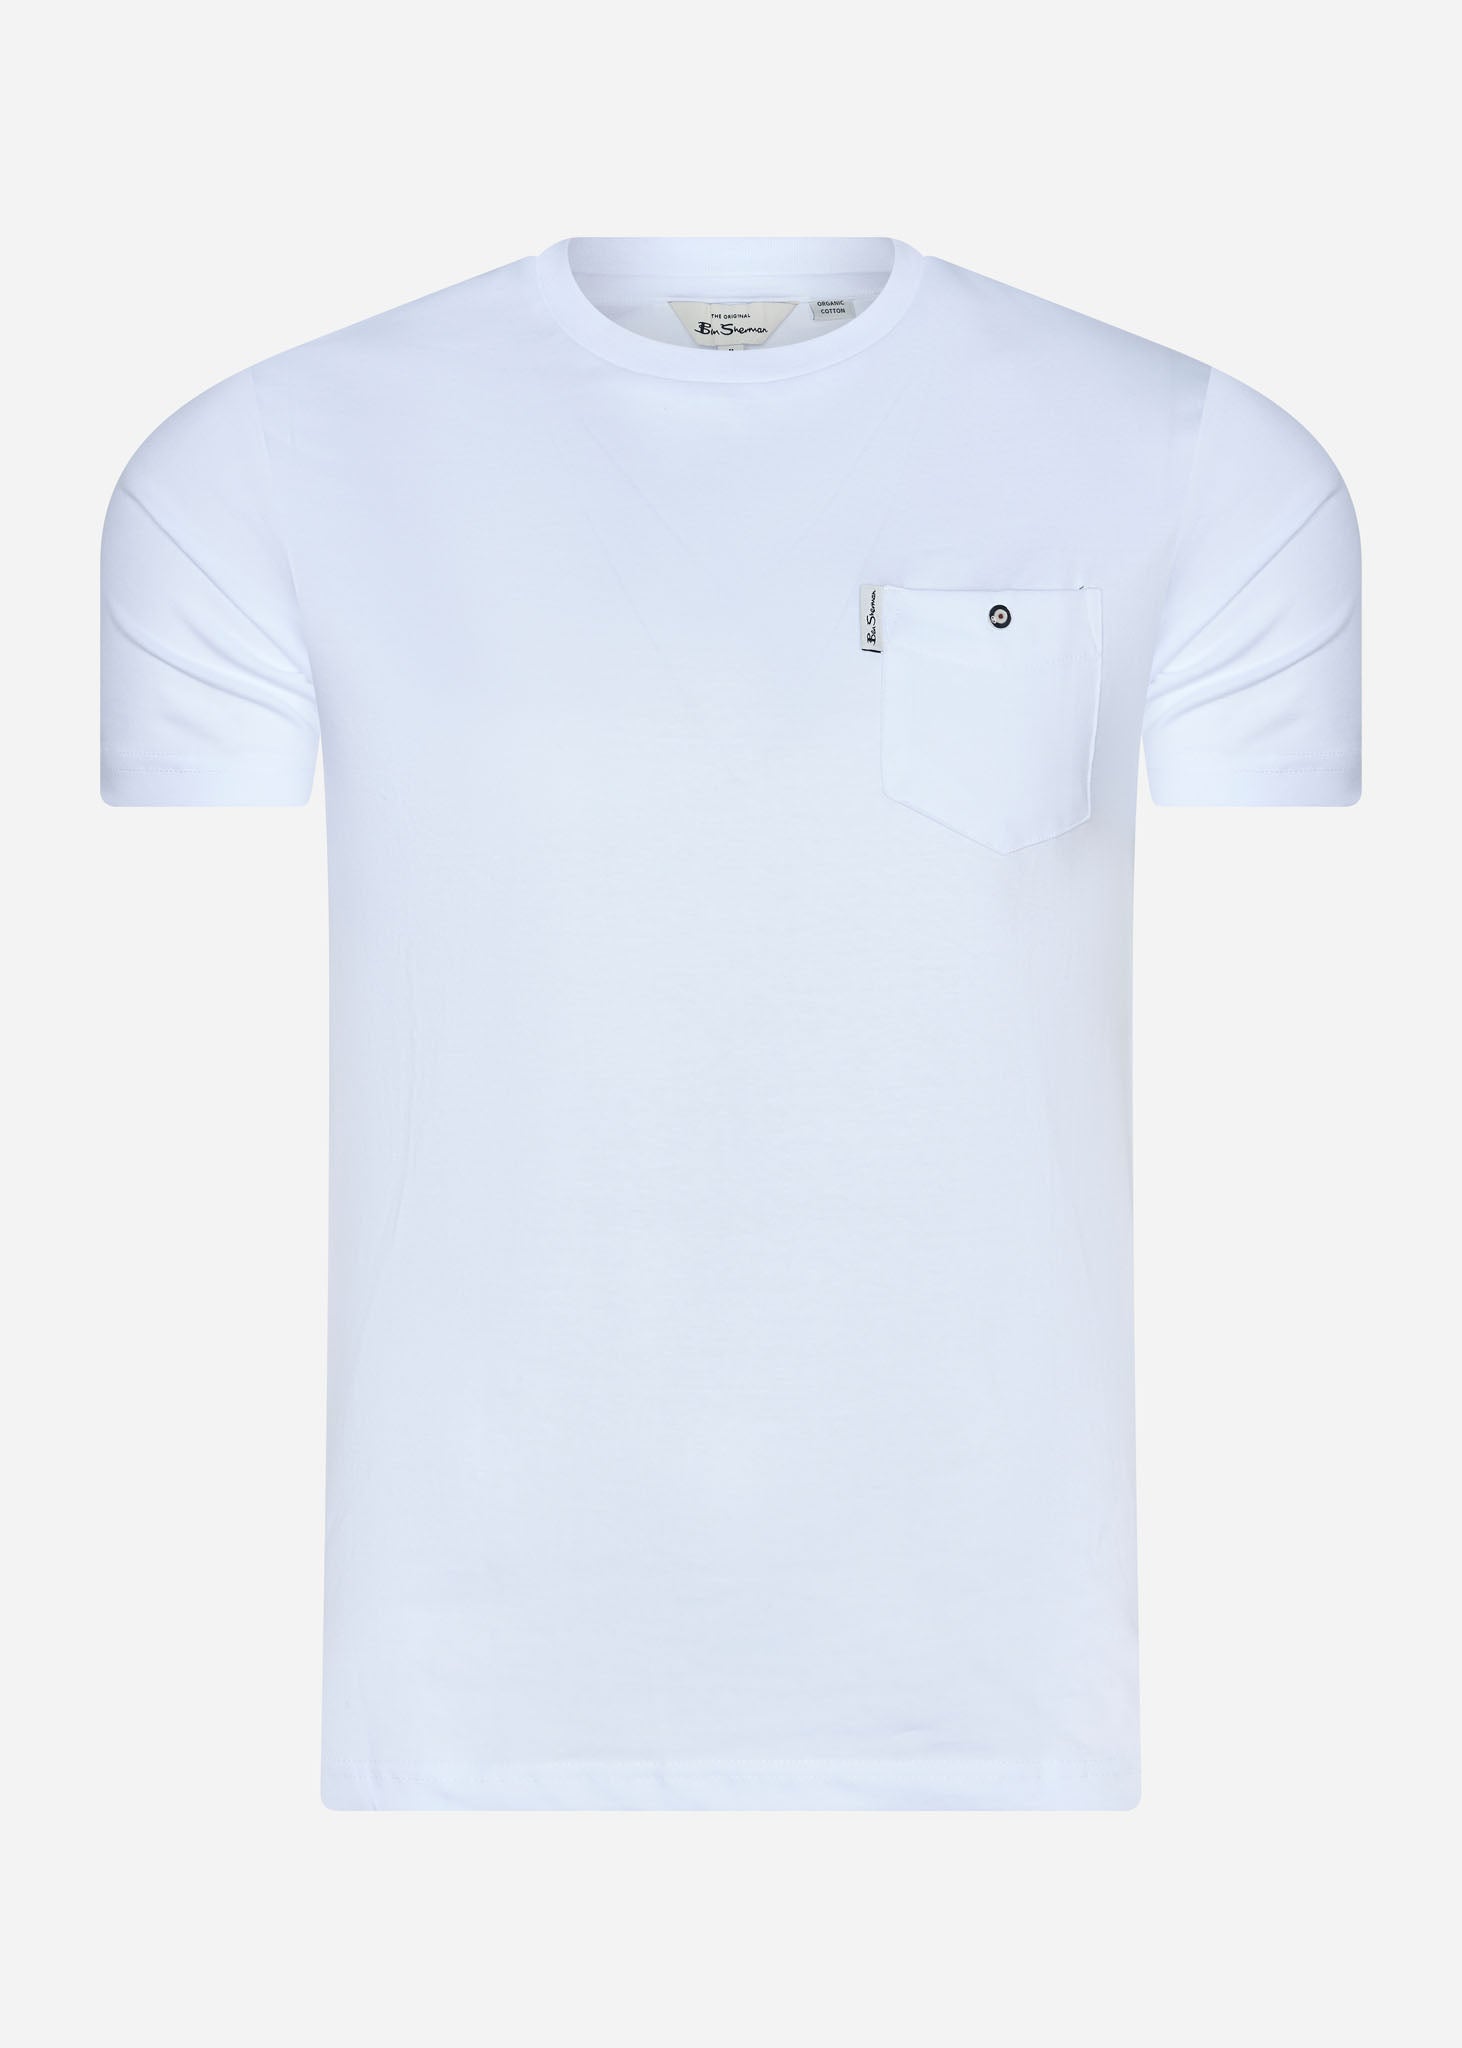 Ben Sherman T-shirts  Signature pocket tee - white 